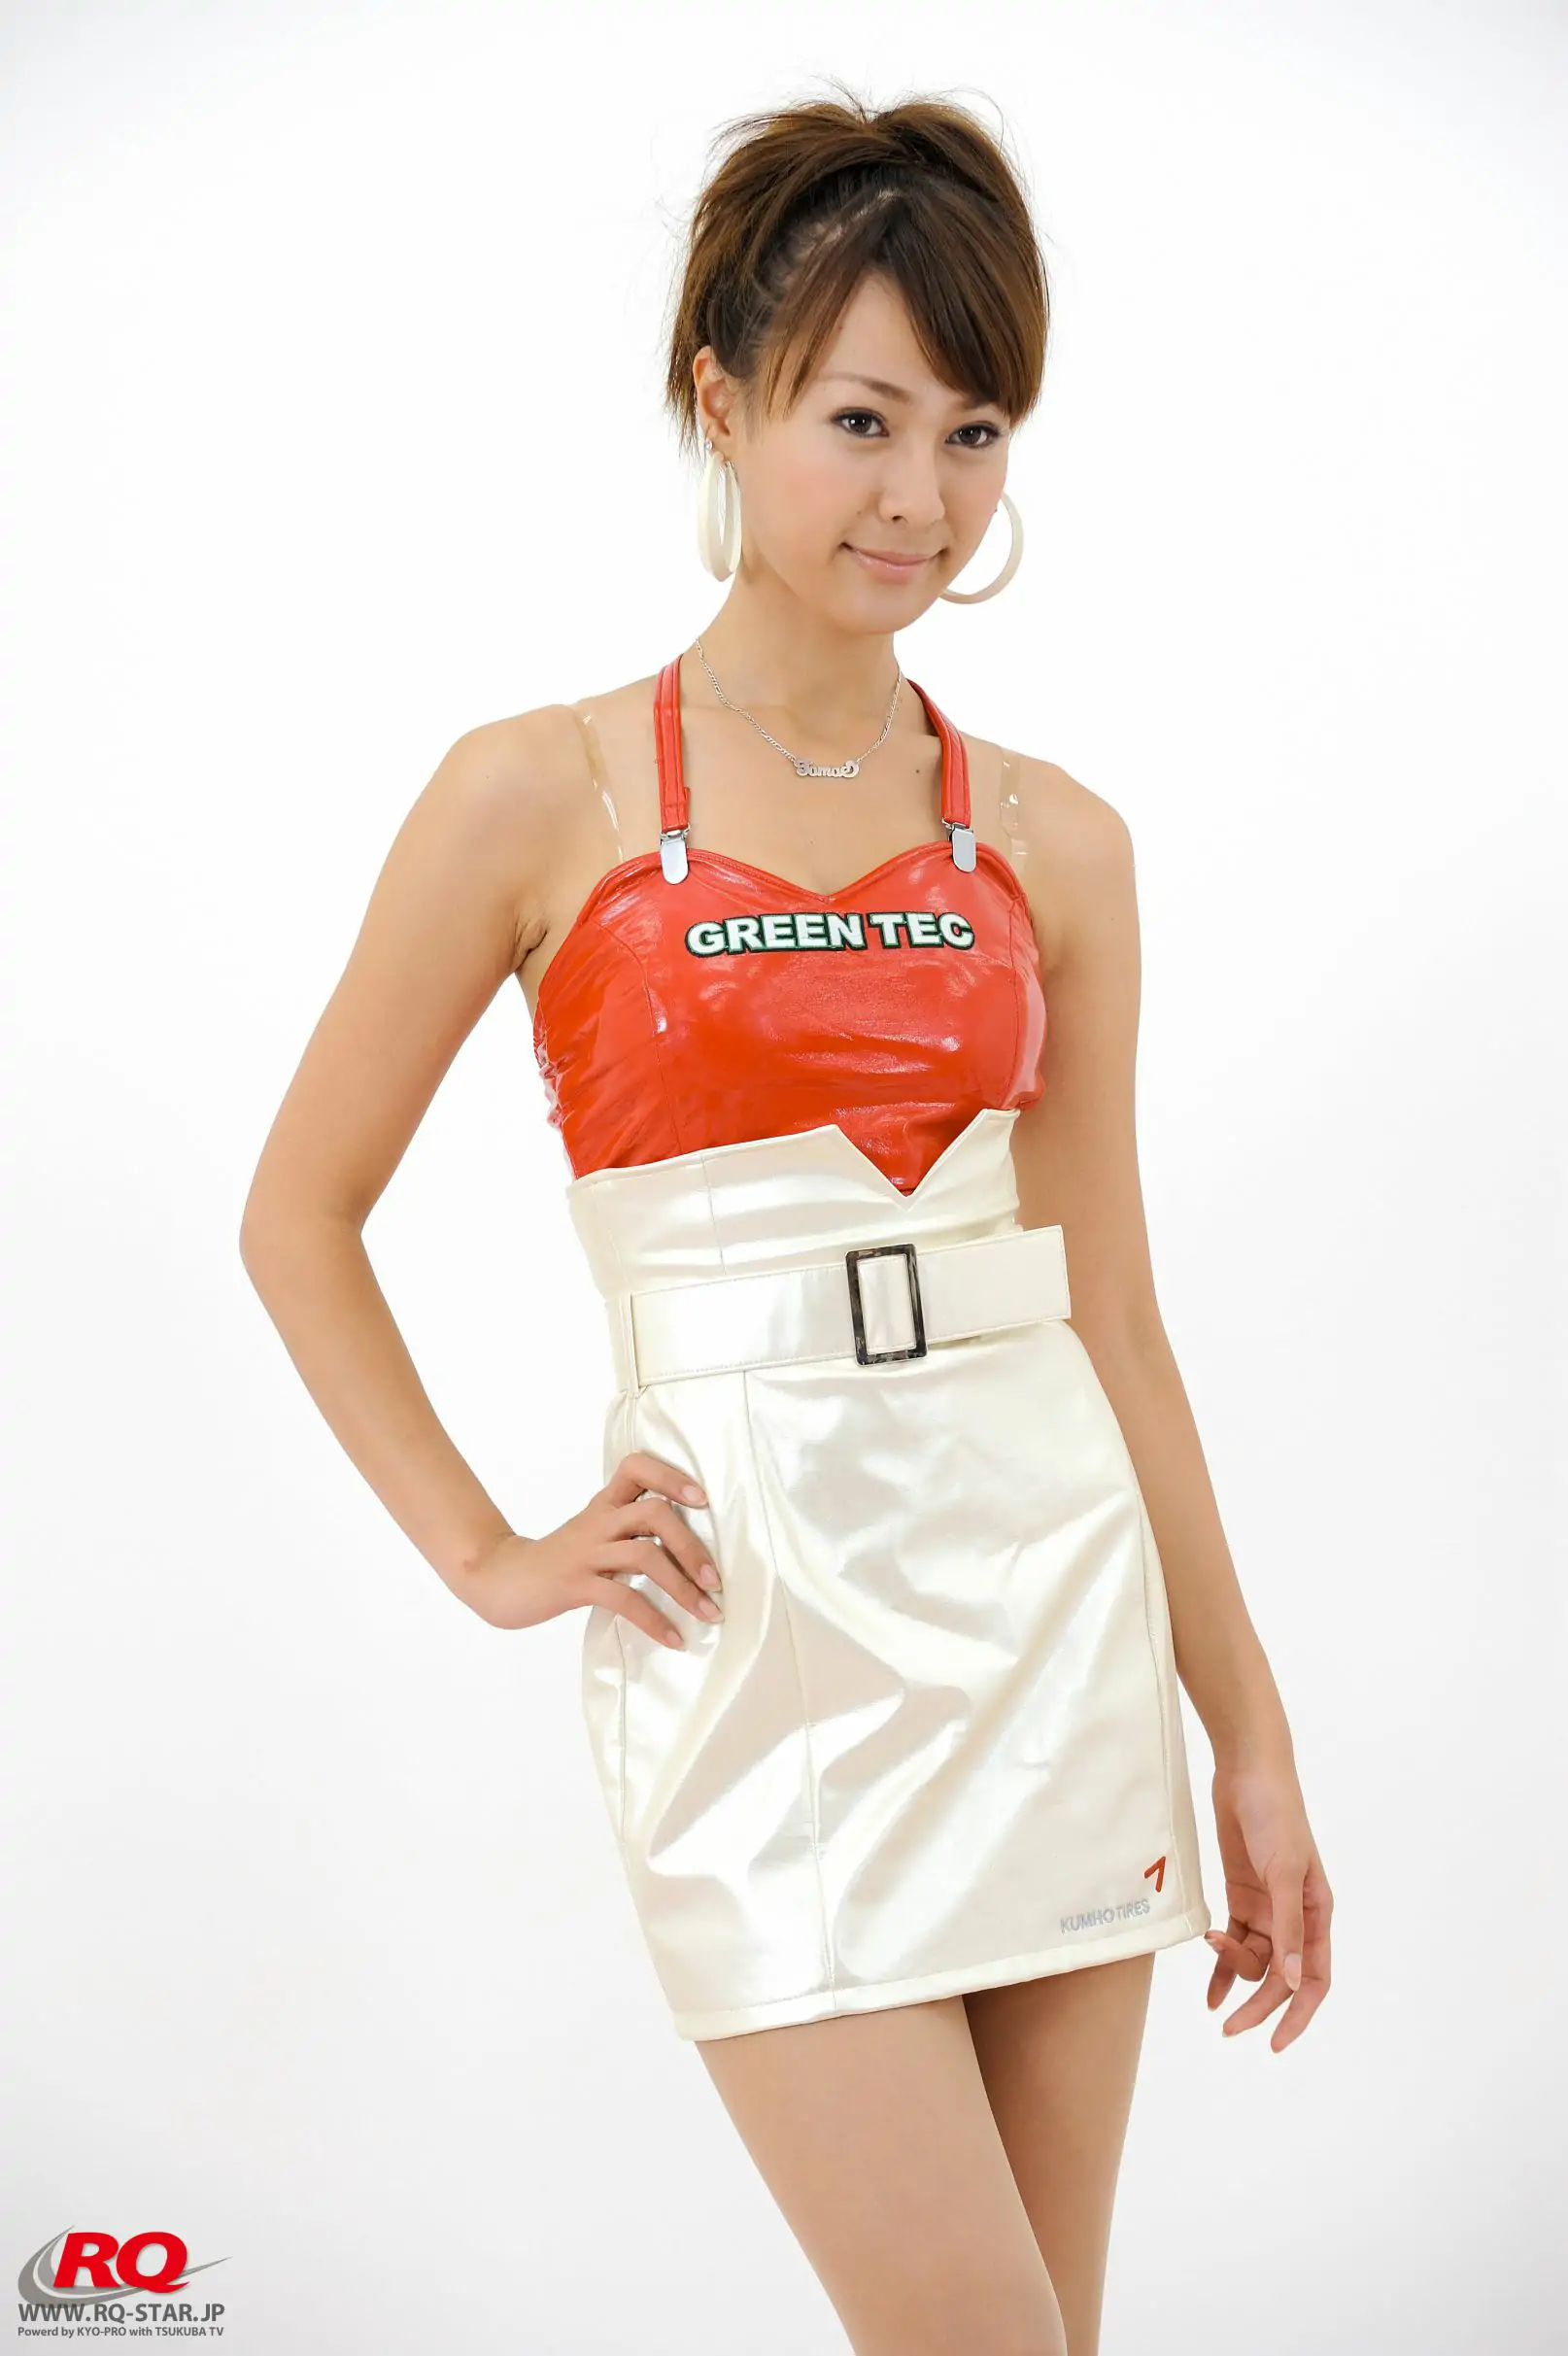 [RQ-STAR] NO.00067 中川知映 Race Queen – 2008 Green Tec  写真集